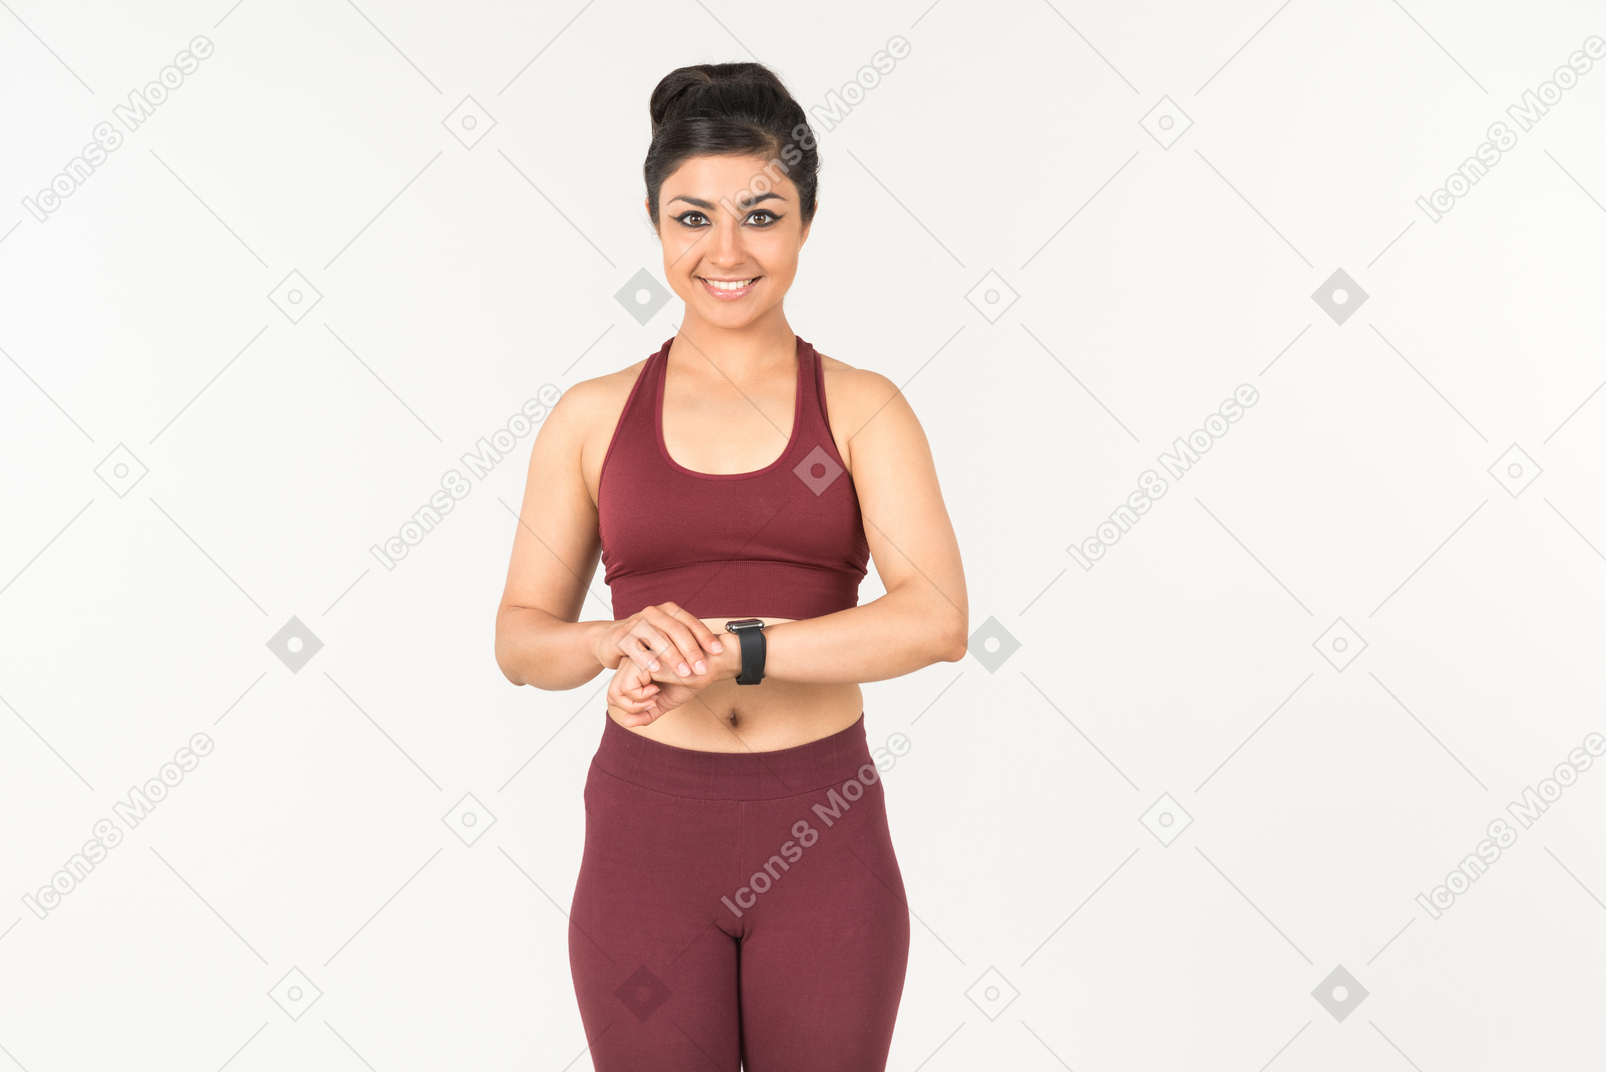 Indian girl in sporstwear checking fitness tracker